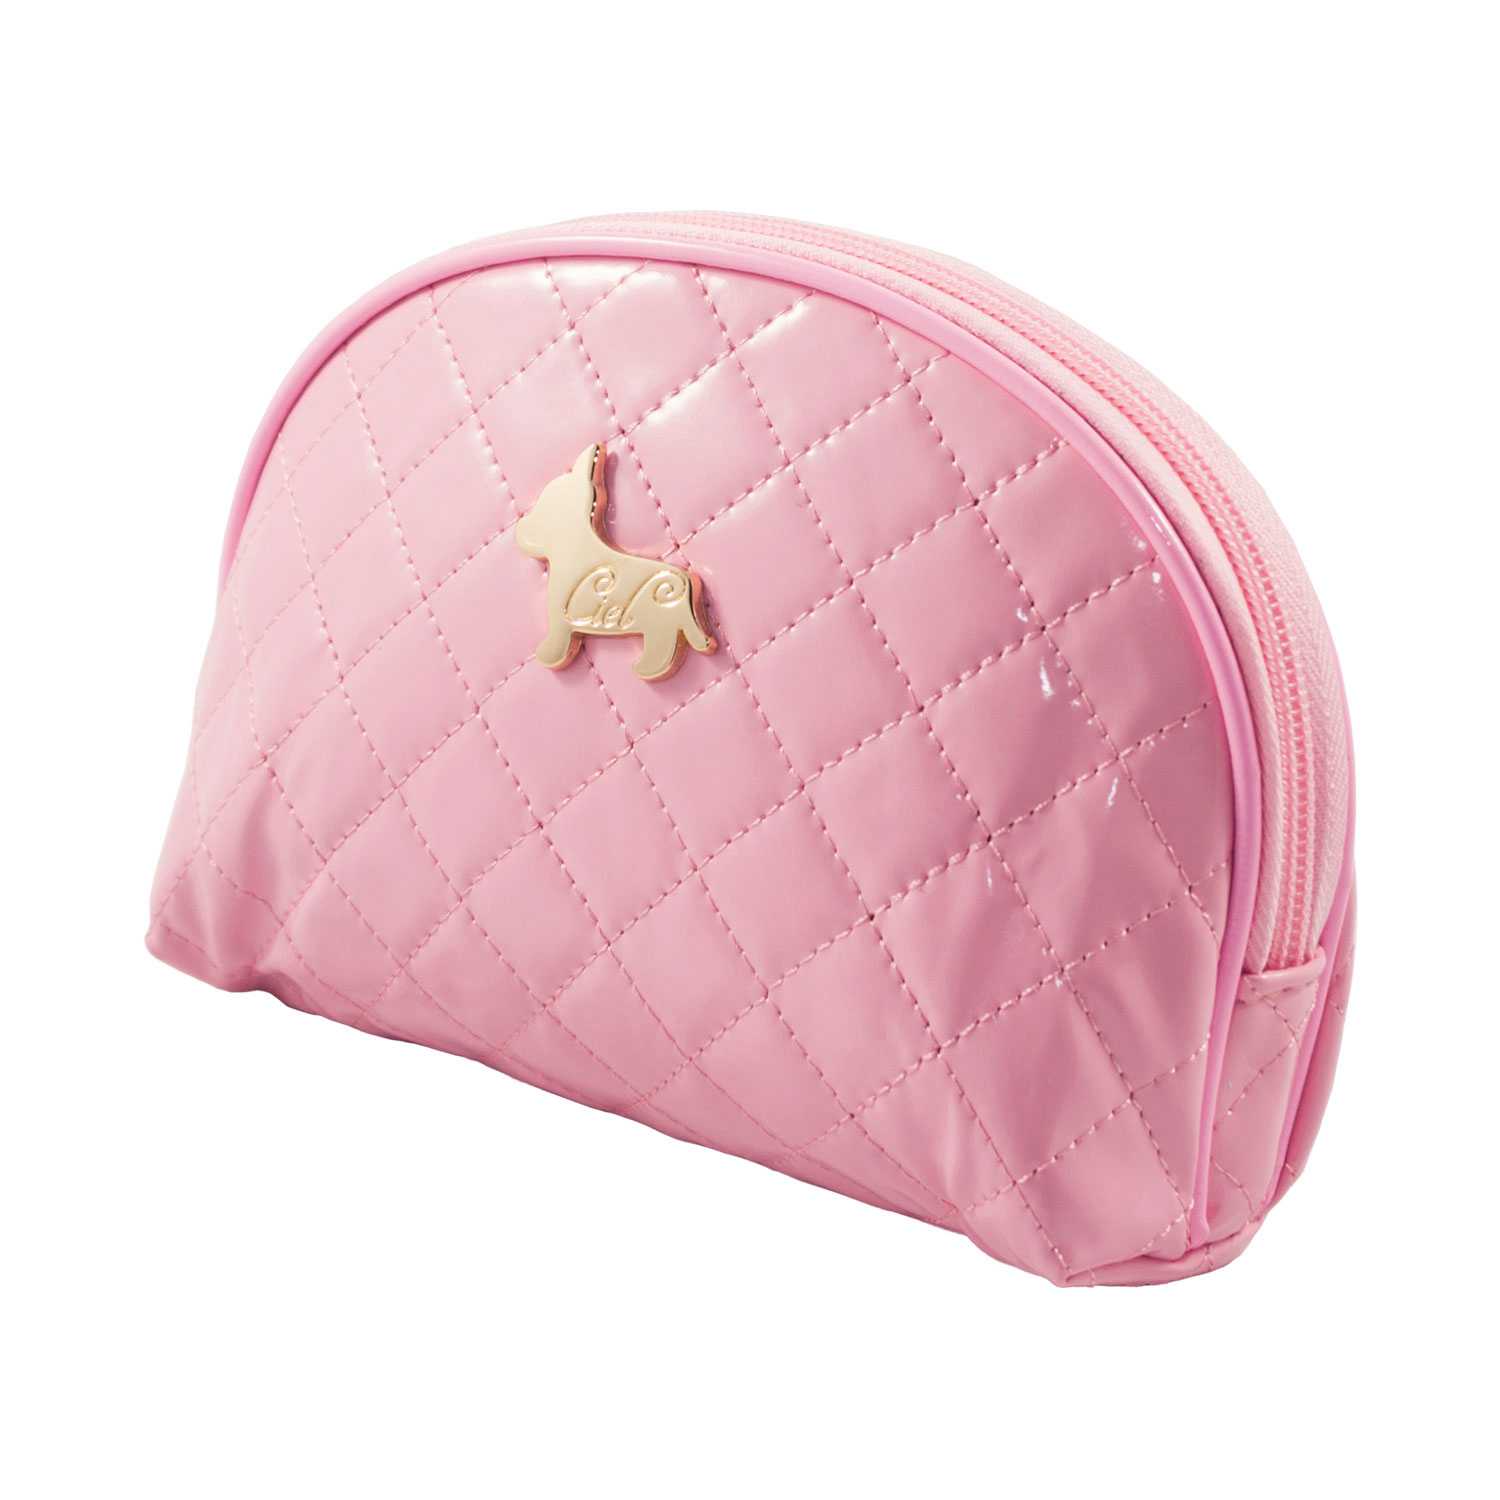 Shiny Half Moon Shape Cosmetic Pouch Bag - Light Pink - Zestique